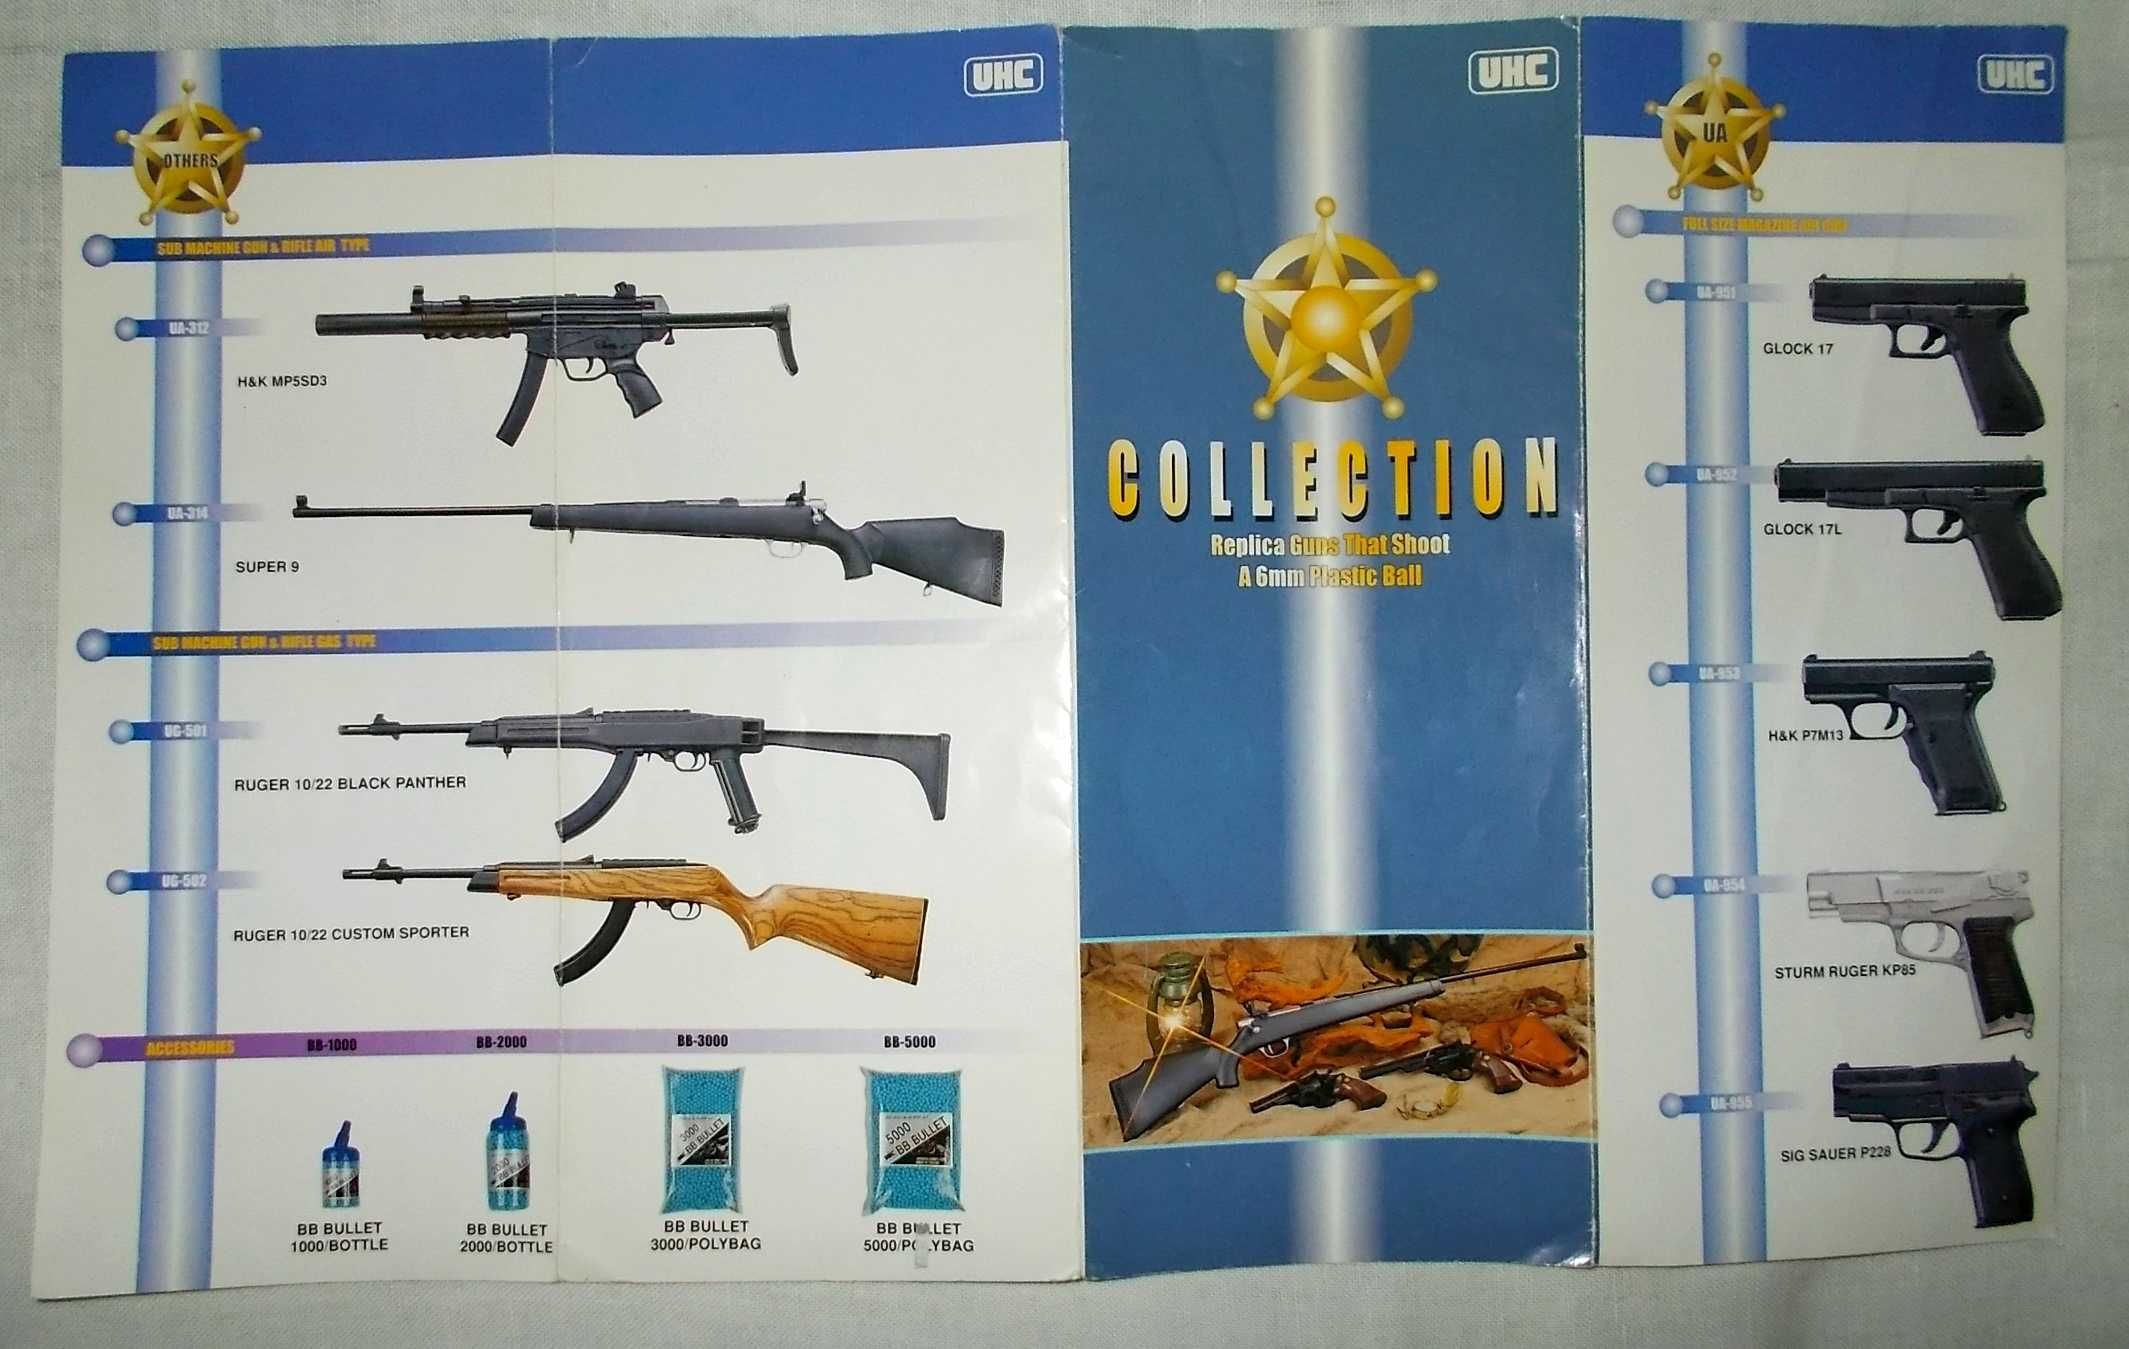 Vintage - Katalog replik ASG firmy UHC - 1999r.